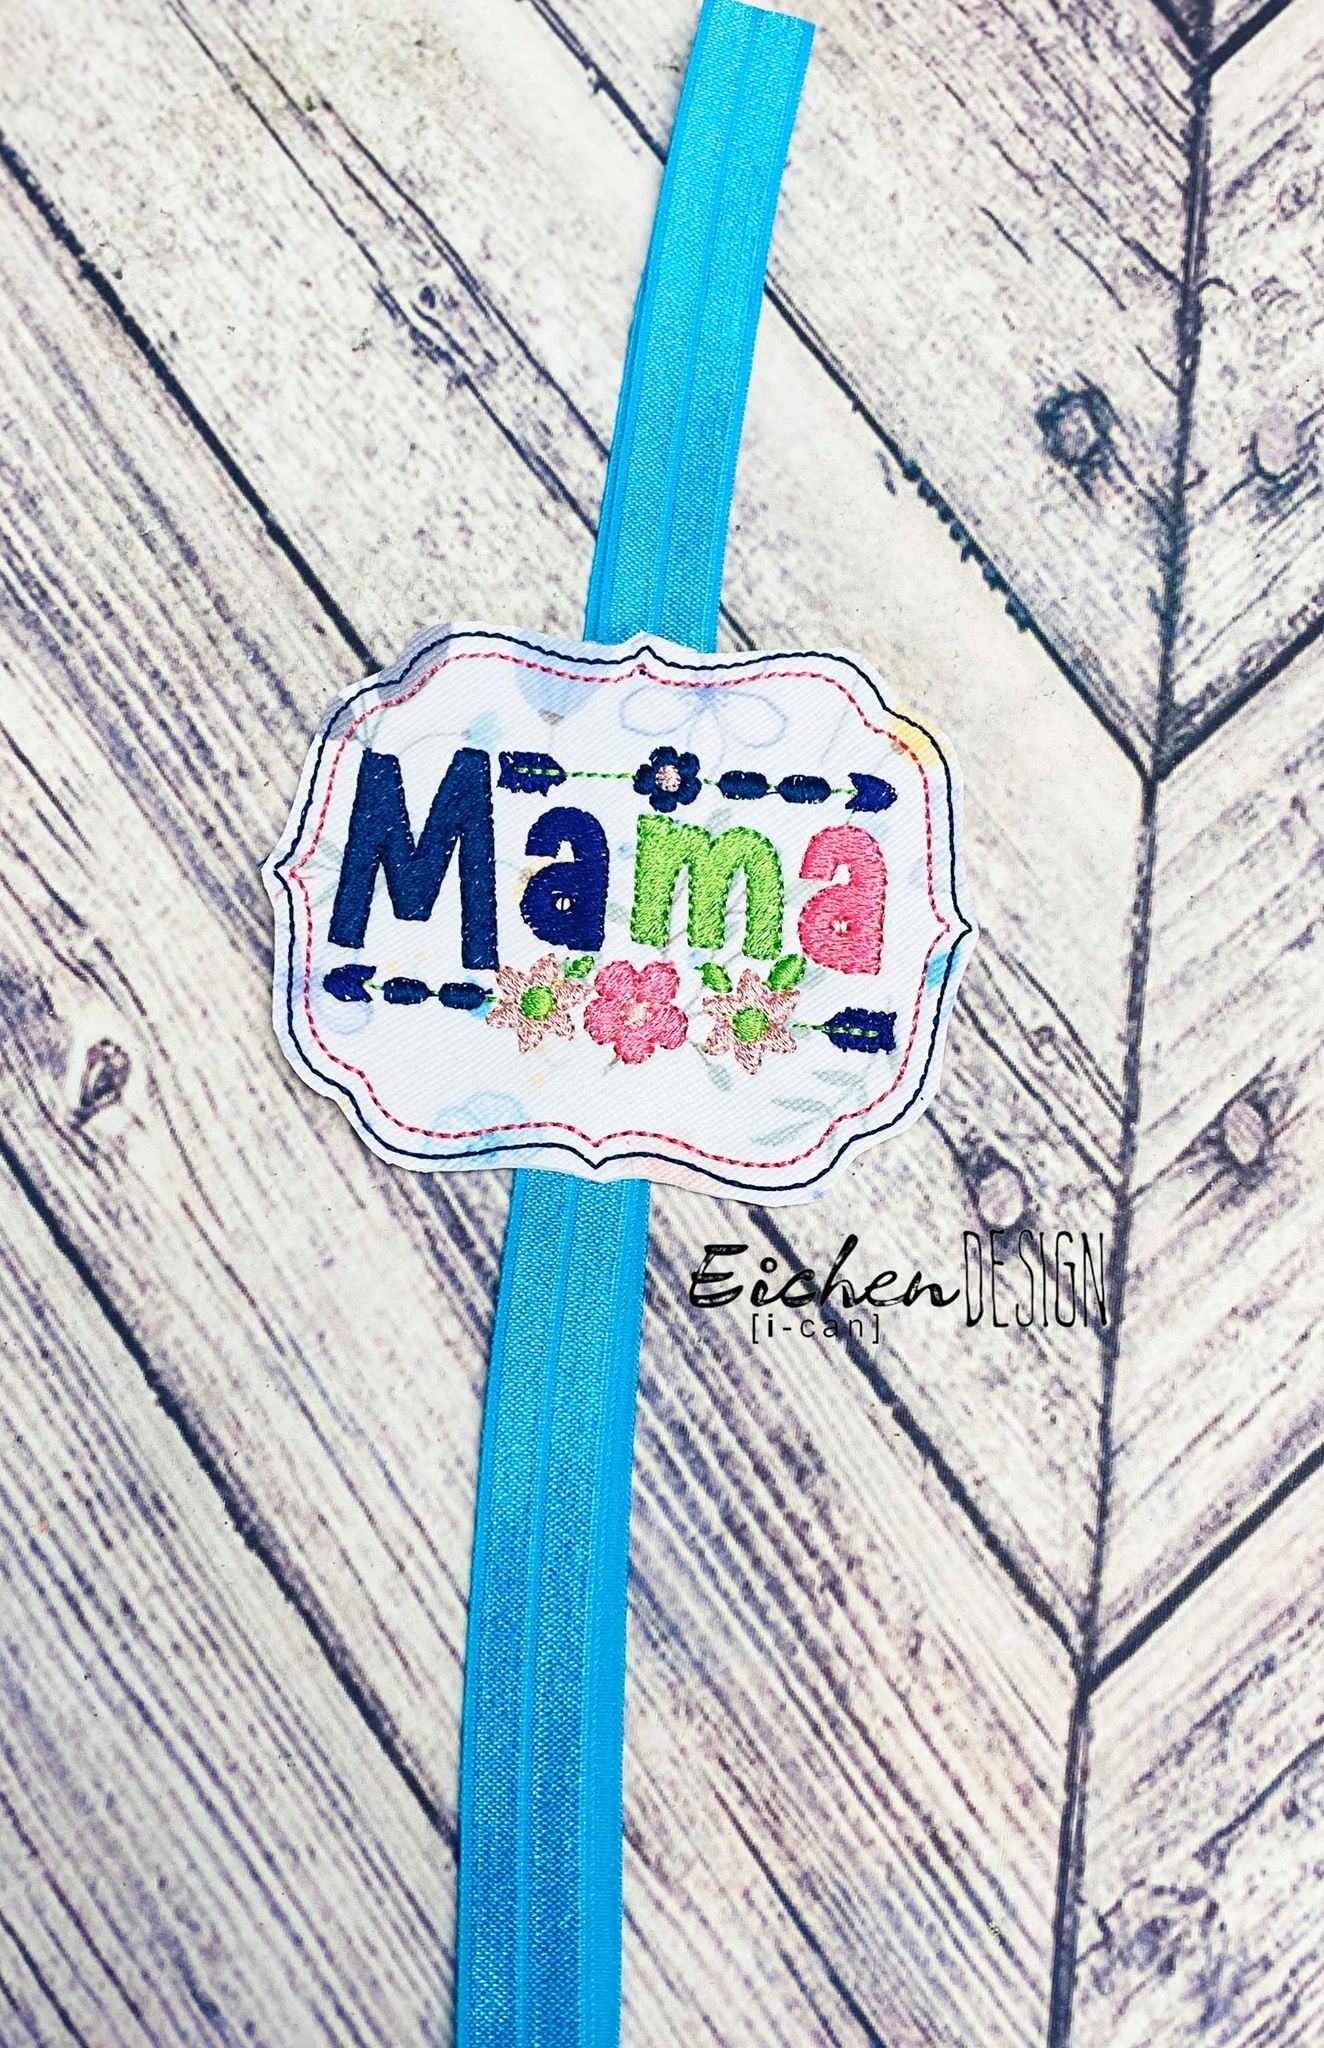 Mama Book Band - Digital Embroidery Design